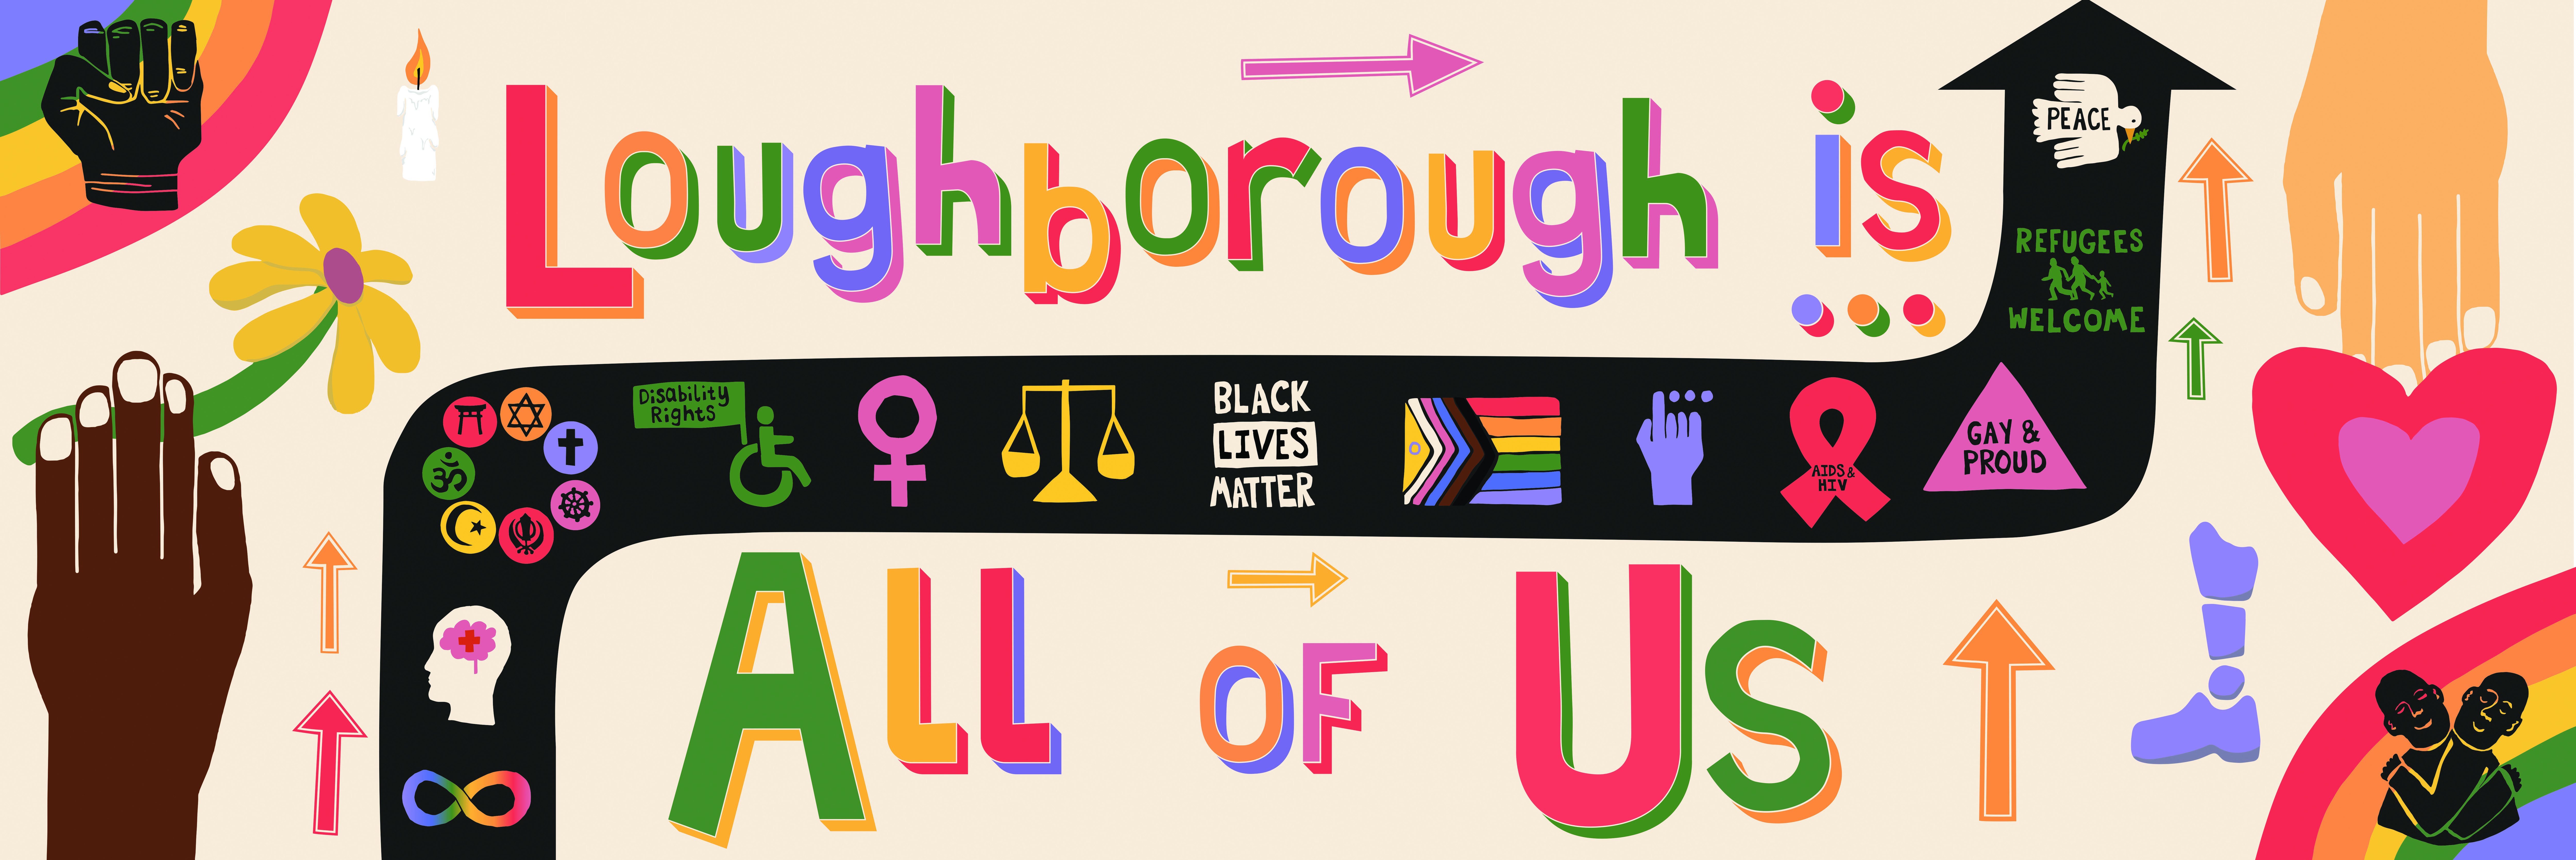 Inclusivity mural competition winner Kelsey Bebbington's 'All of Us'